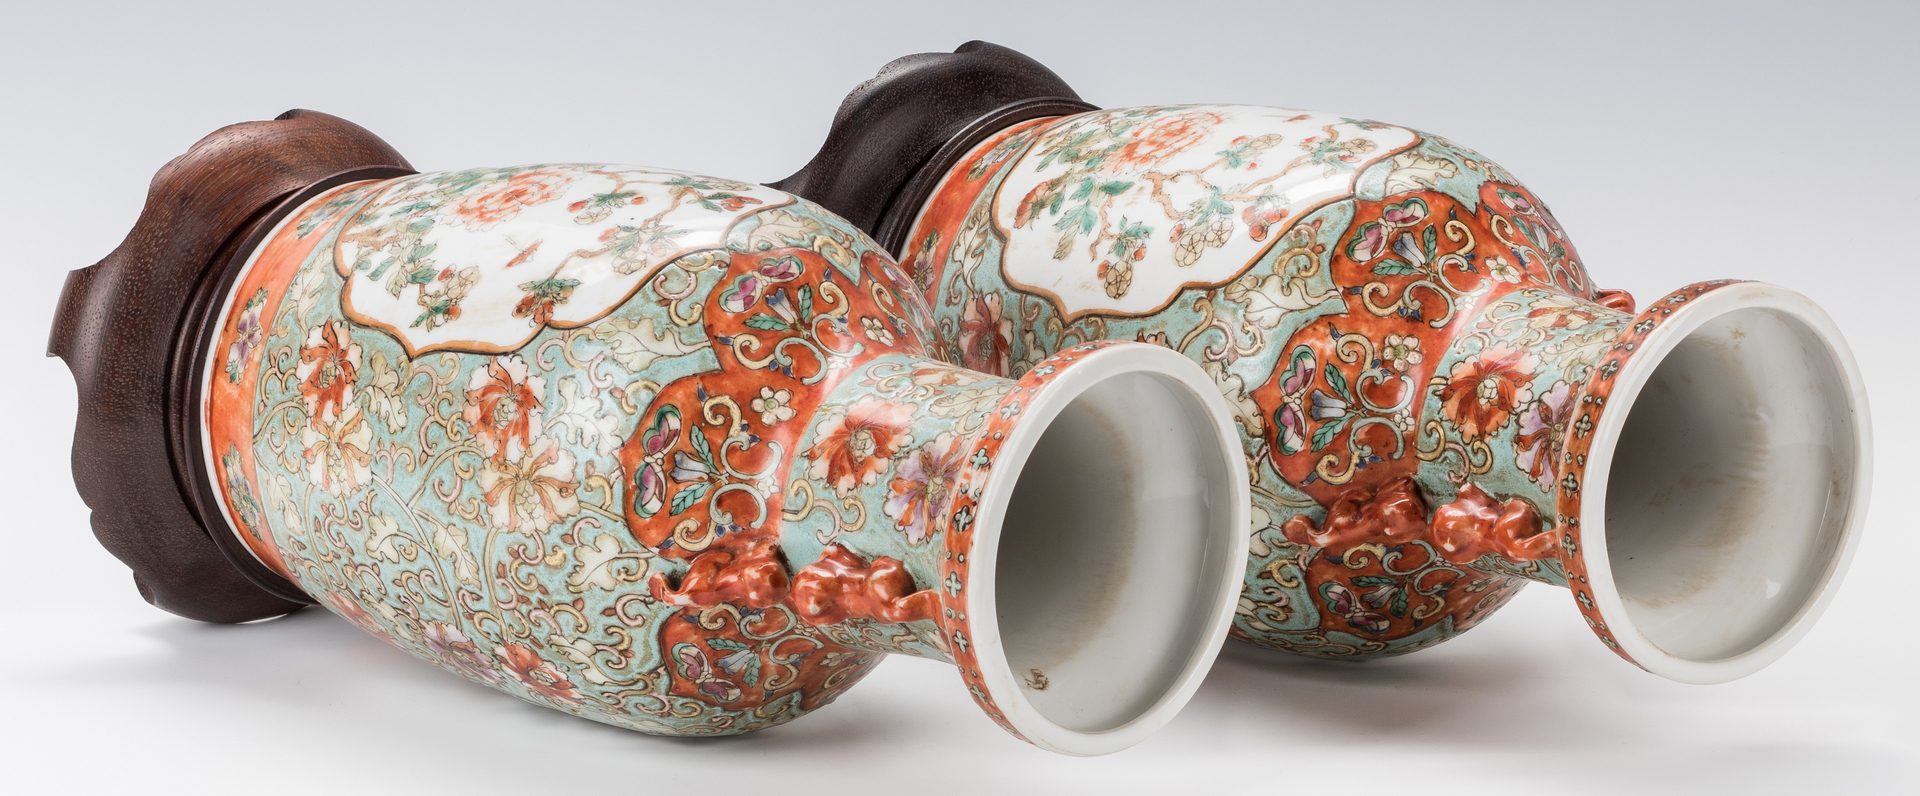 Lot 765: Pr. Chinese Export Porcelain Vases, Modern